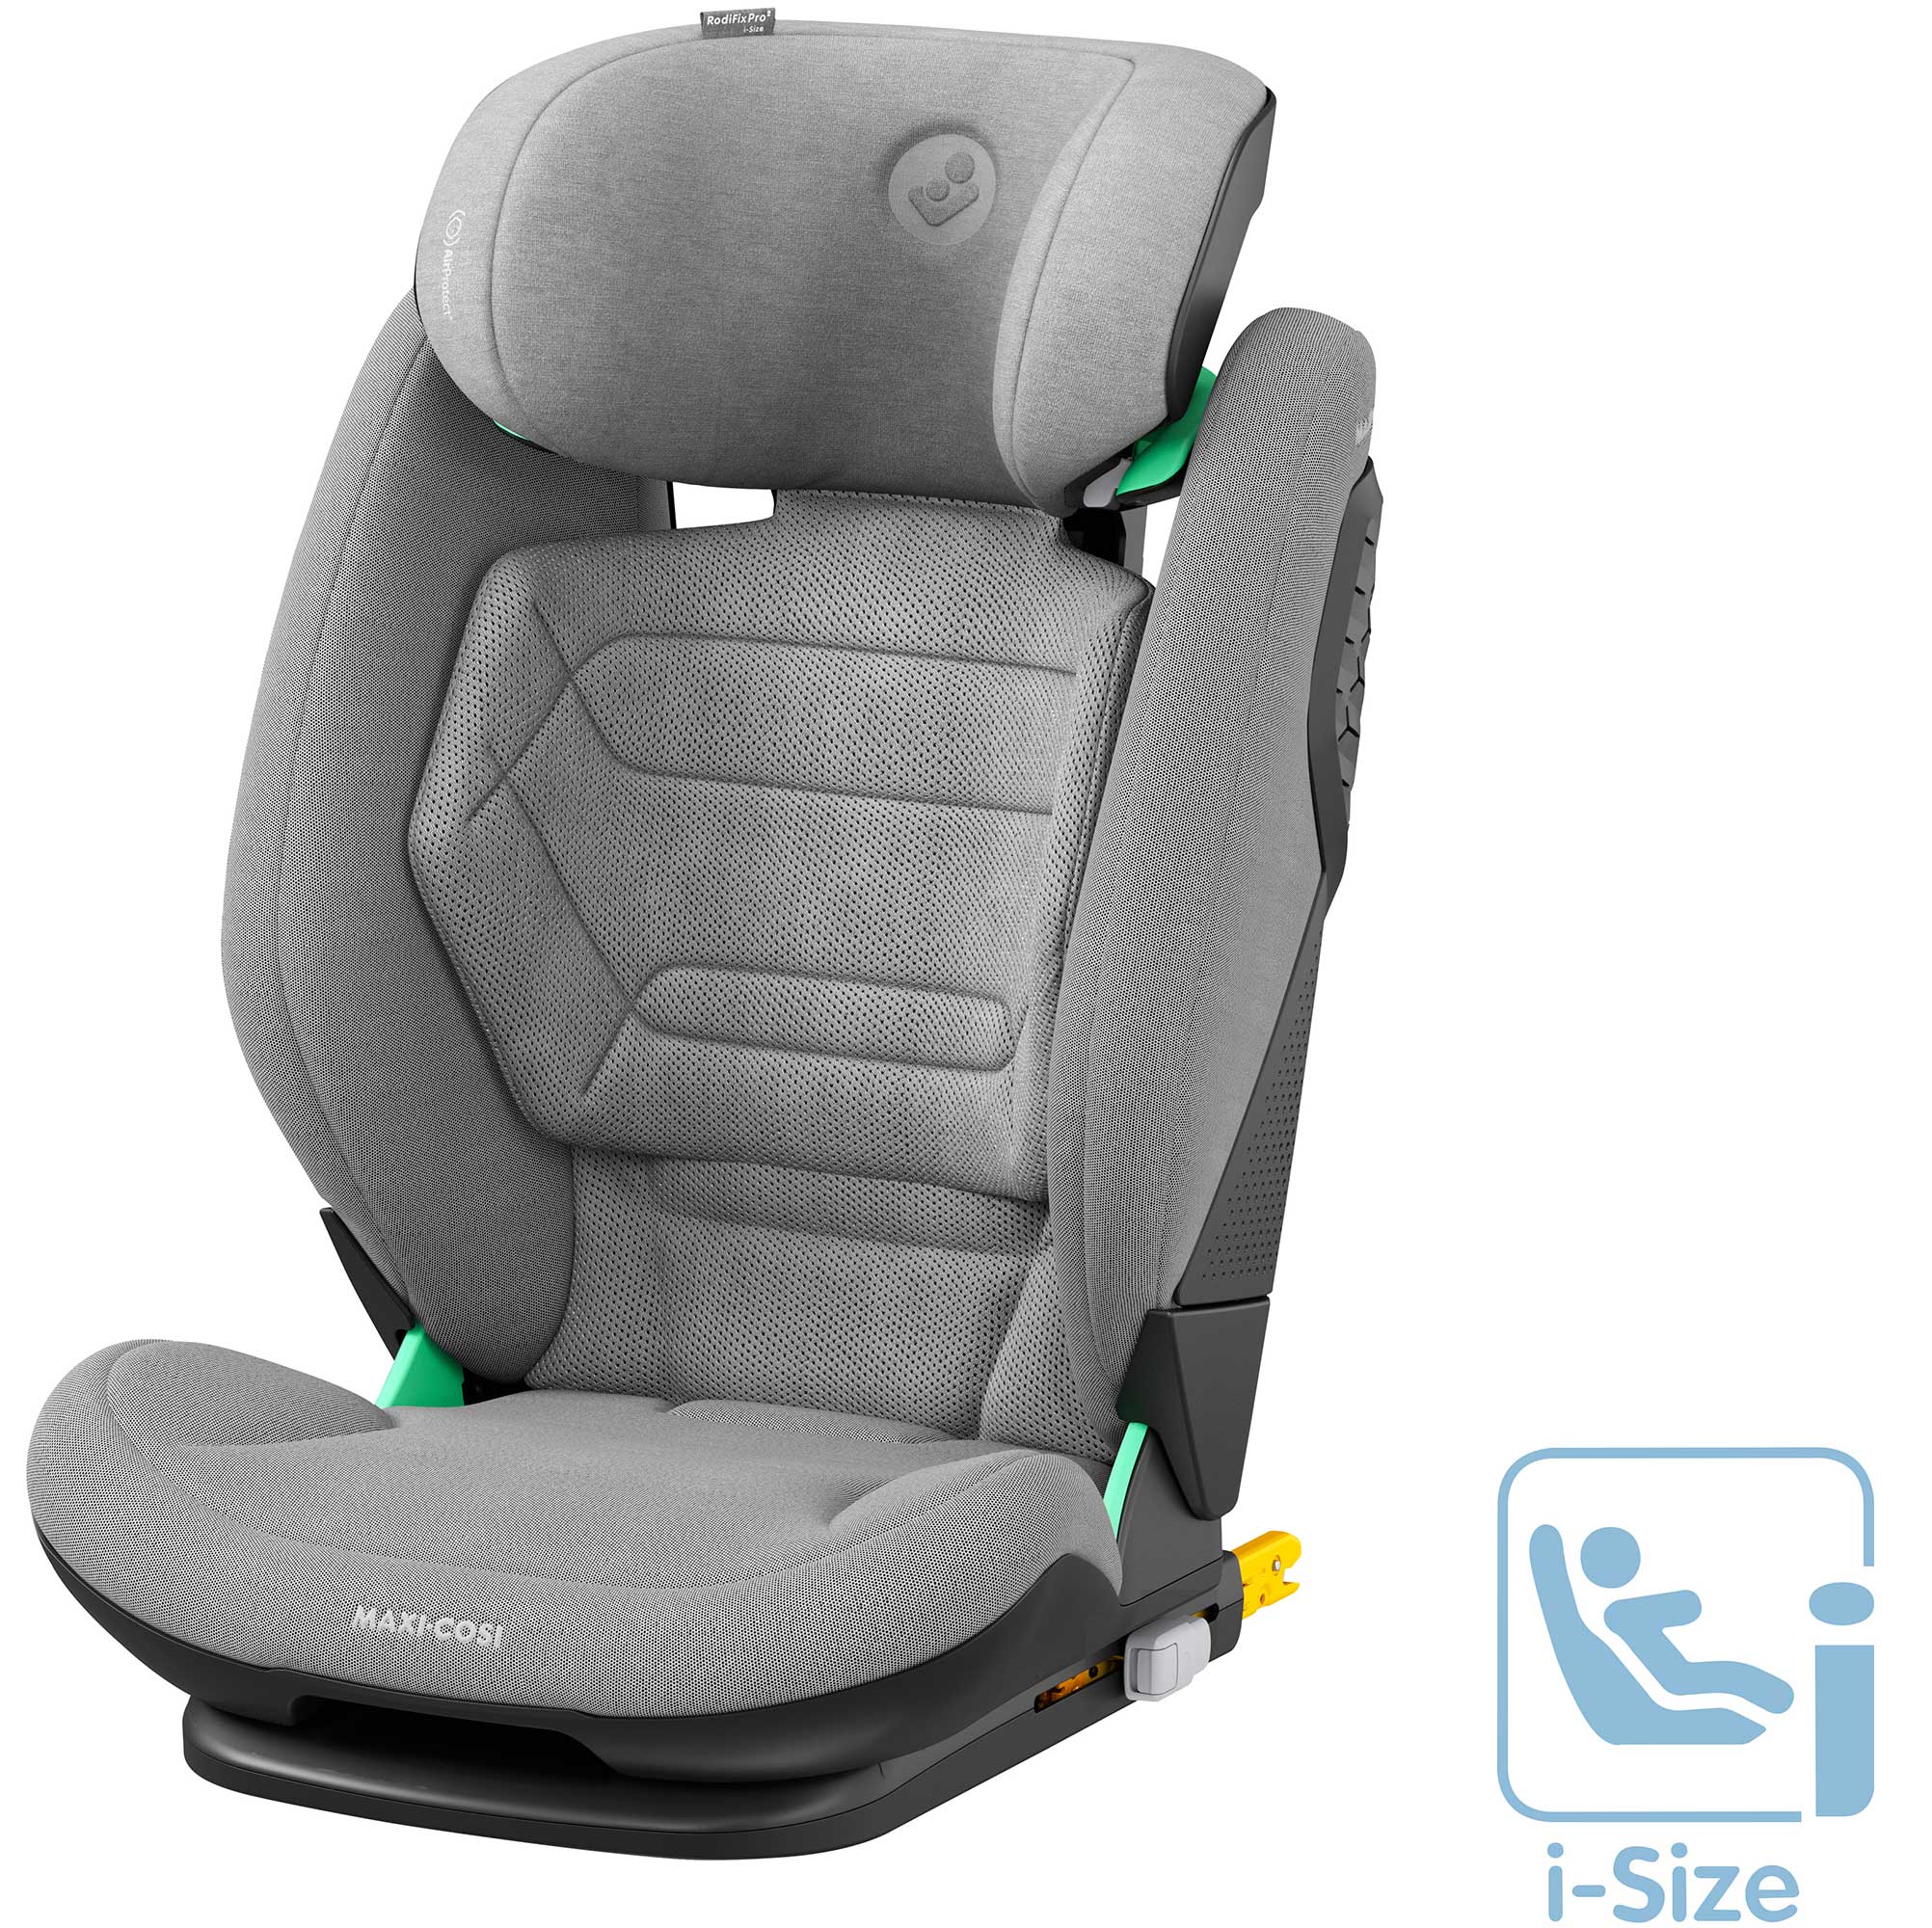 Maxi-Cosi highback booster seats Maxi-Cosi Rodifix Pro 2 Highback Booster - Authentic Grey 8800510111